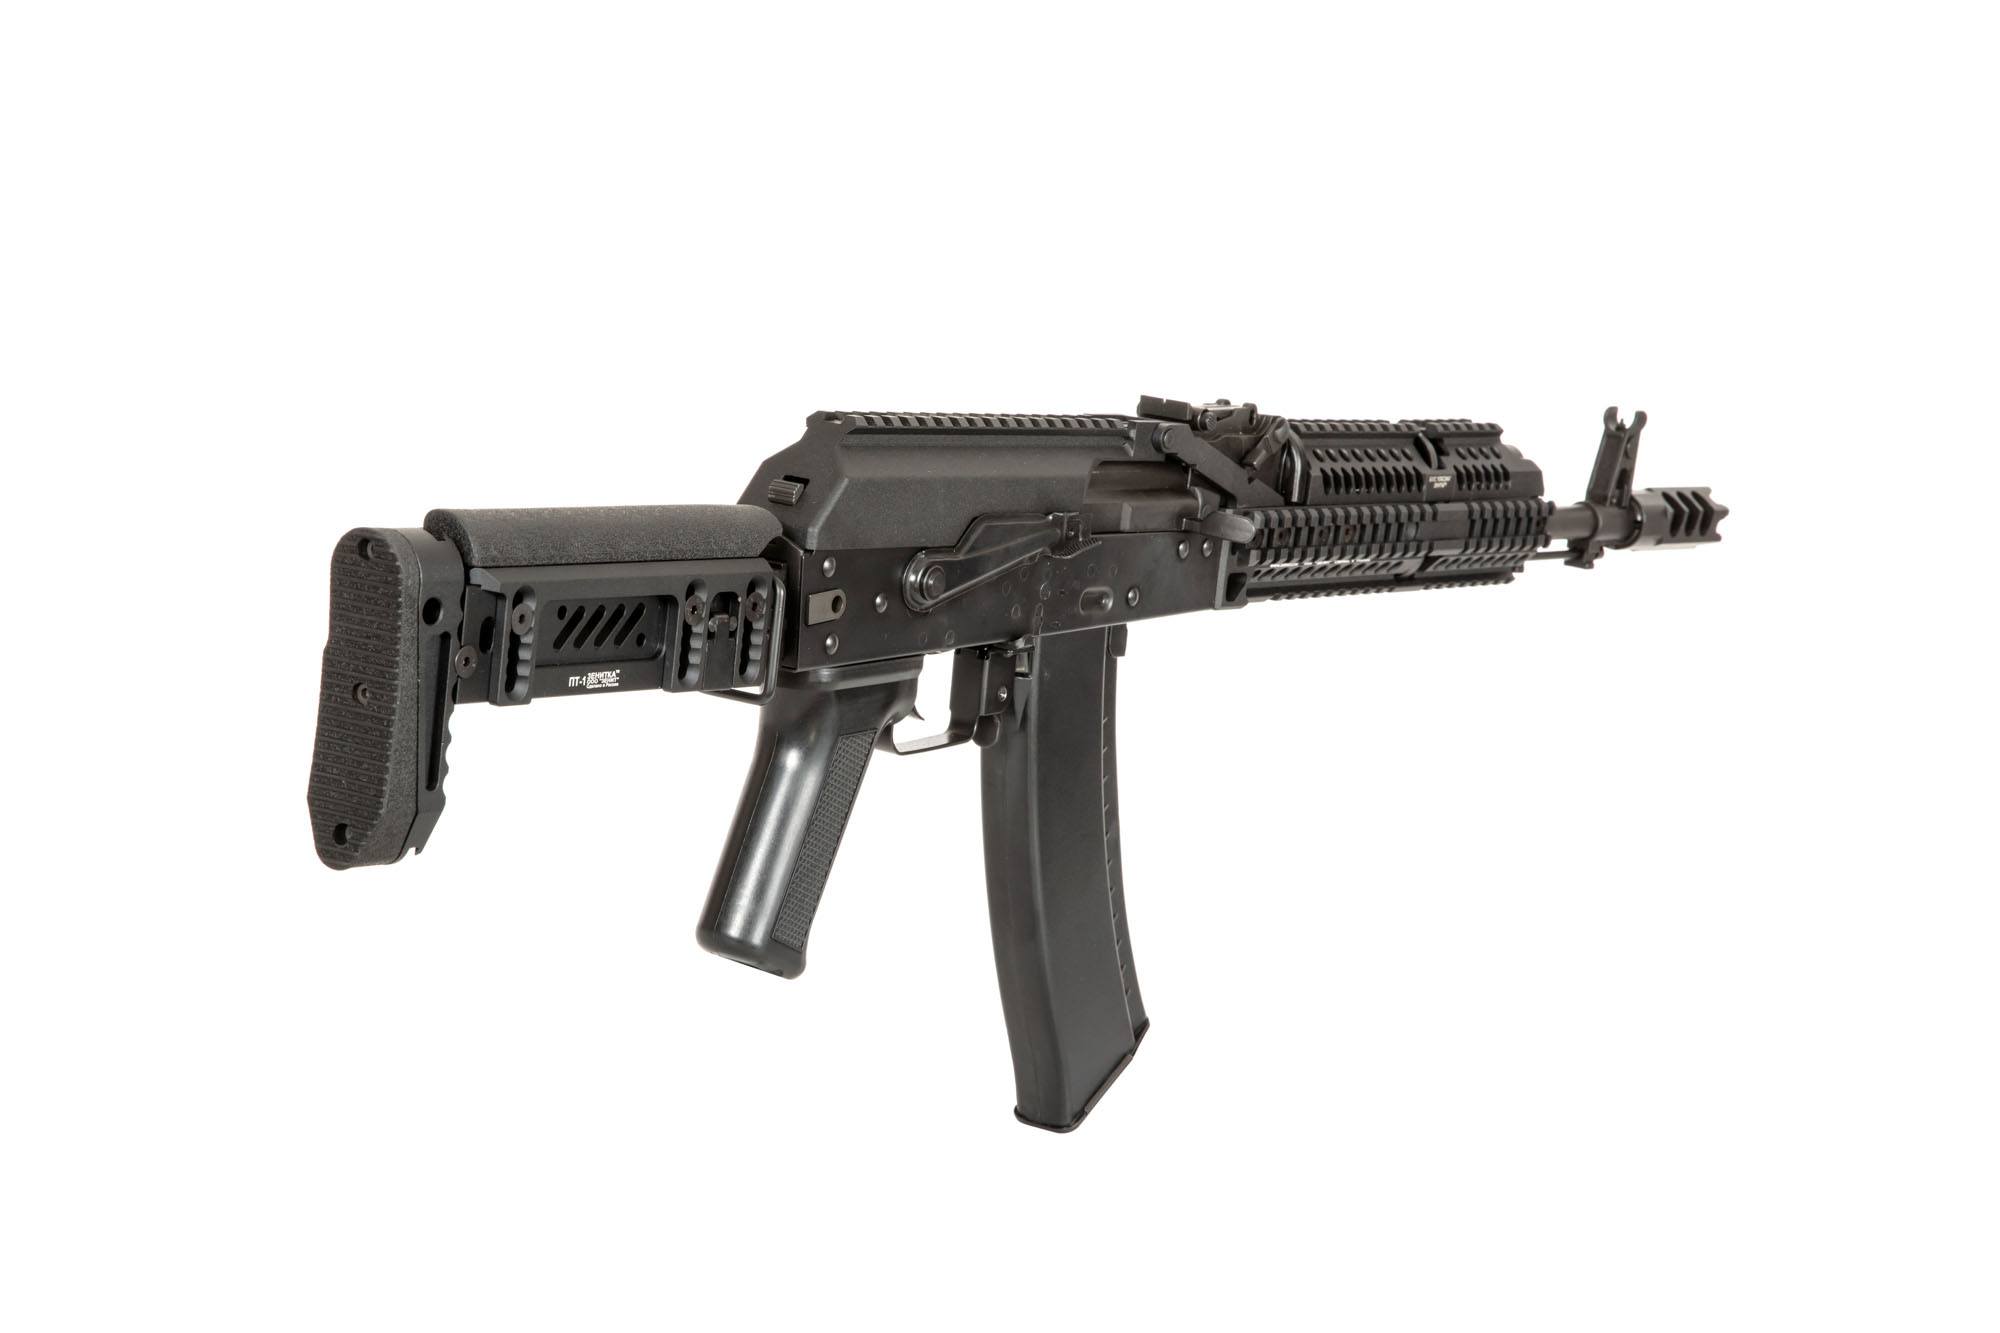 AKS-74M Karabiner Replik (ZKS-74M)